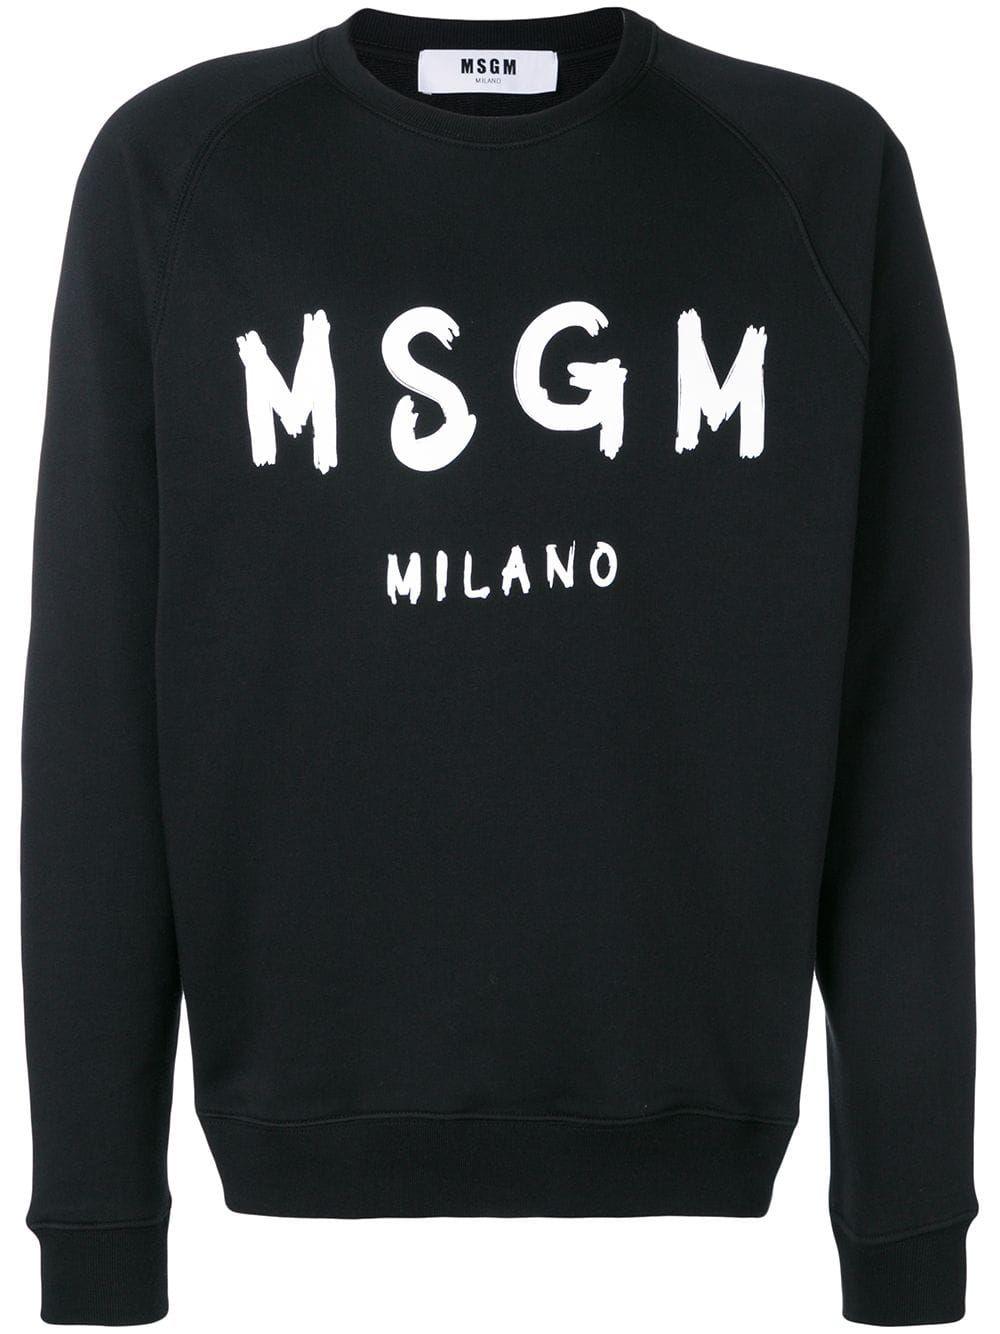 MSGM Black Cotton Sweatshirt for Men - Save 3% - Lyst